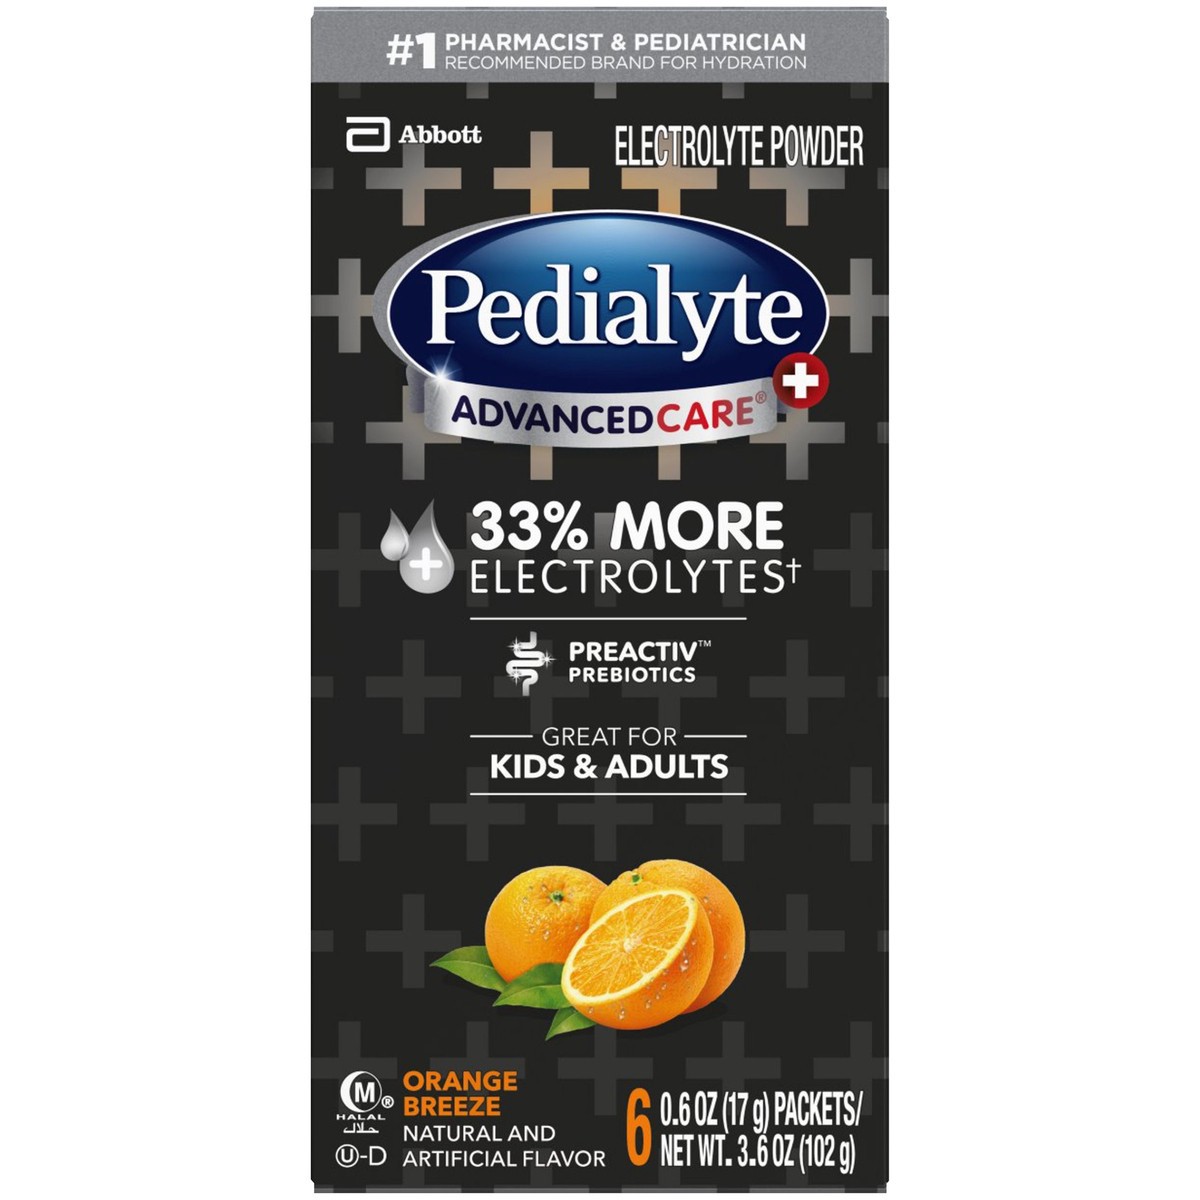 slide 7 of 9, Pedialyte AdvancedCare Plus Electrolyte Powder Orange Breeze Total, 3.6 oz